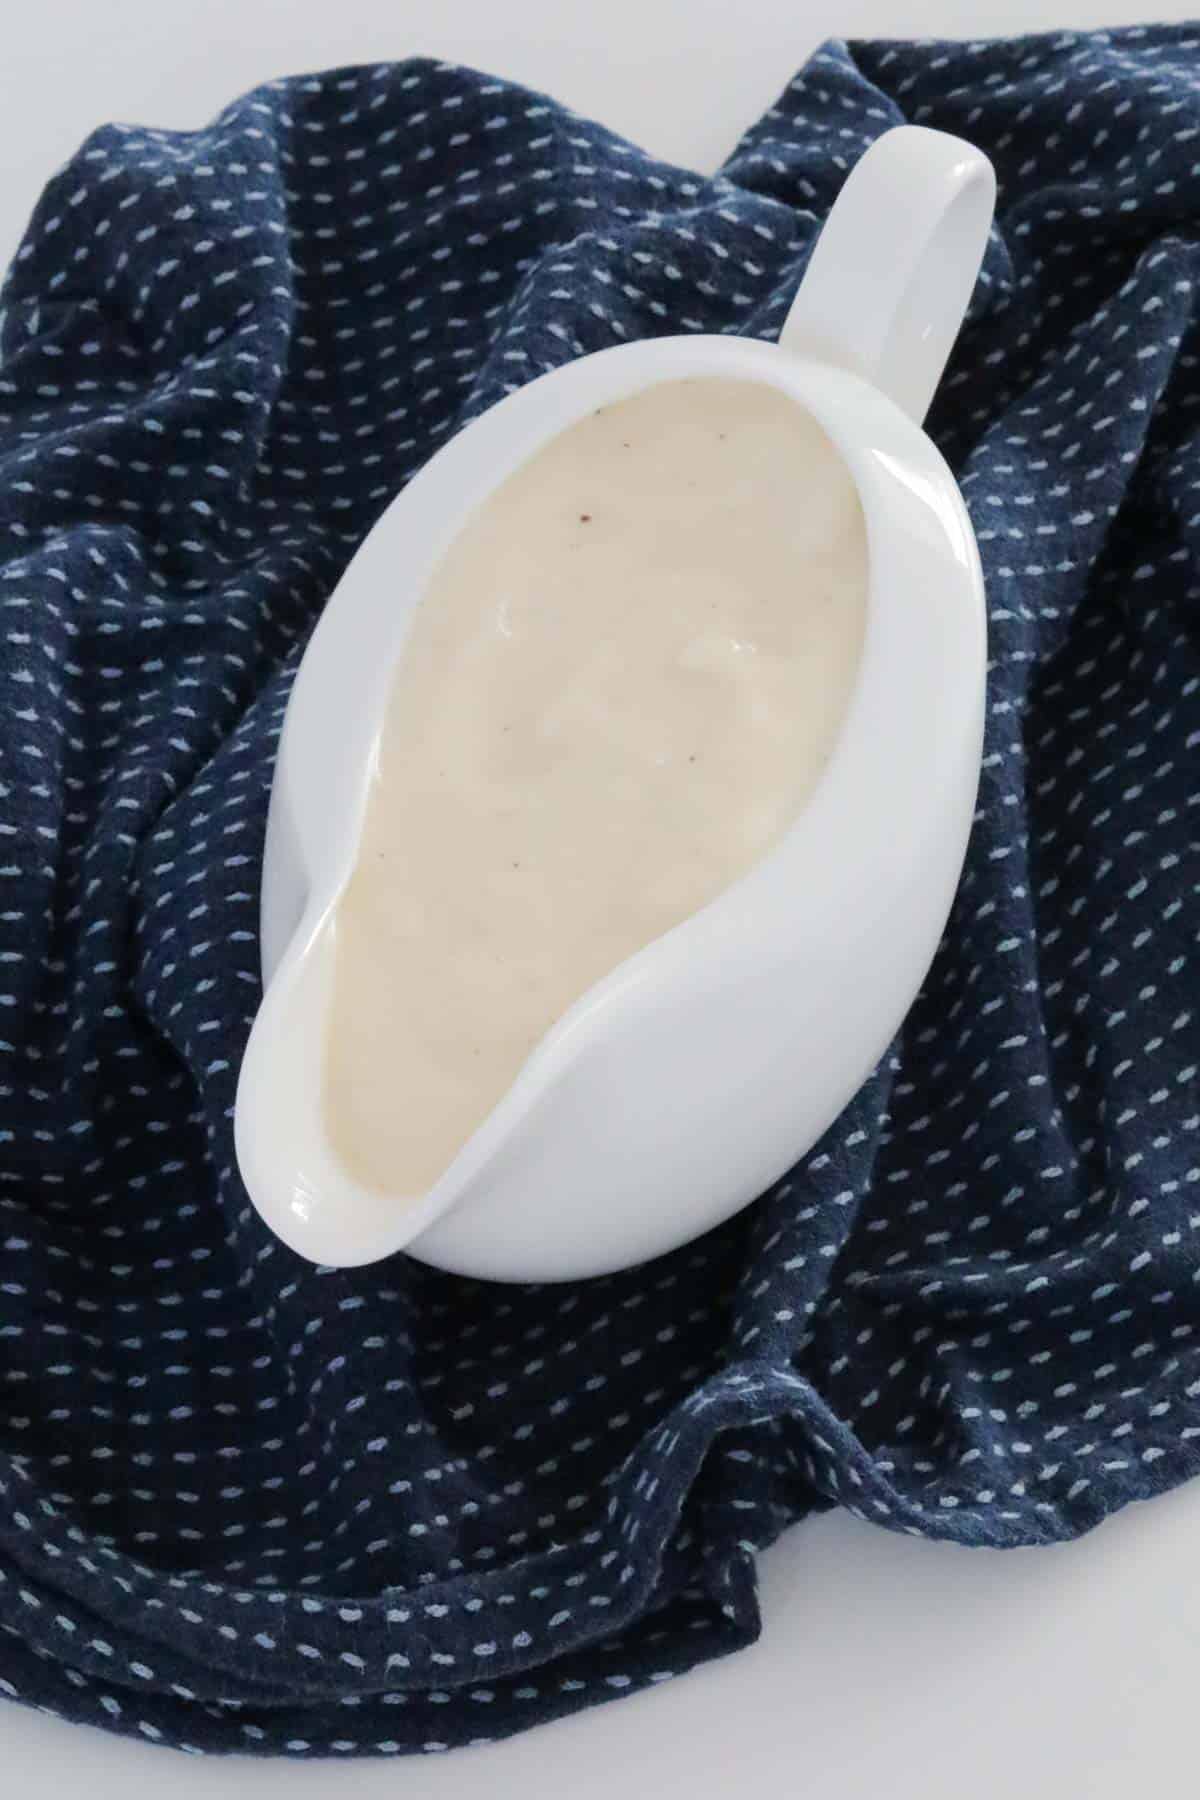 A creamy bechamel sauce in a white jug.